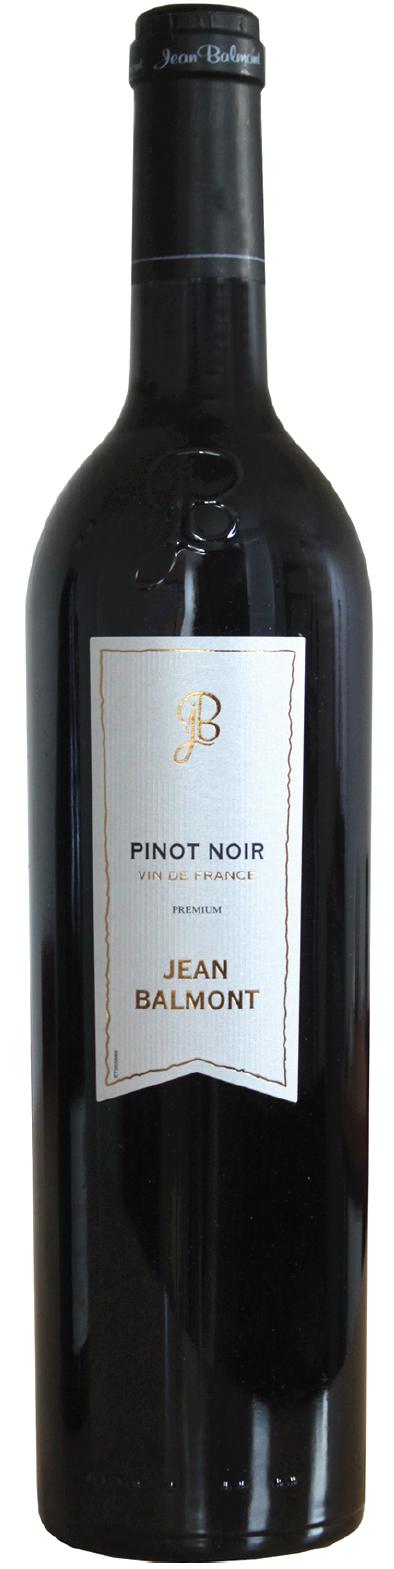 2101-vin-de-france-jean-balmont-pinot-noir-premium.jpg